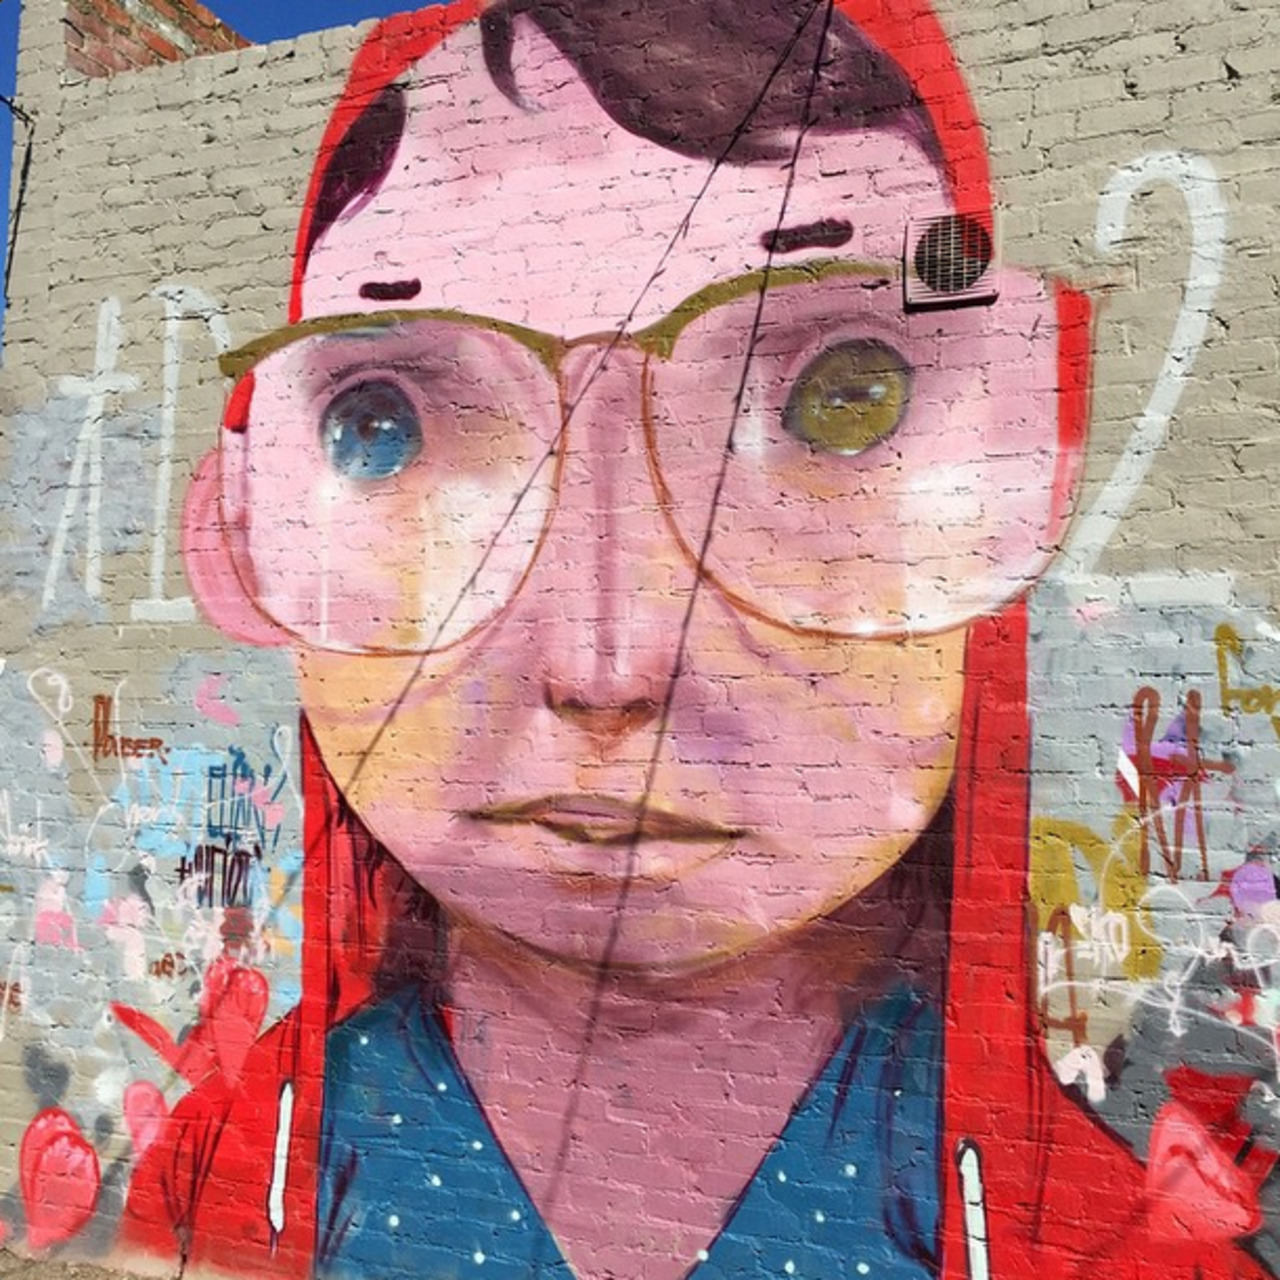 Artist #AndrewHem's sick #mural for @formwa #streetart #urbanart #graffiti #Perth http://t.co/INDQqu1jTG